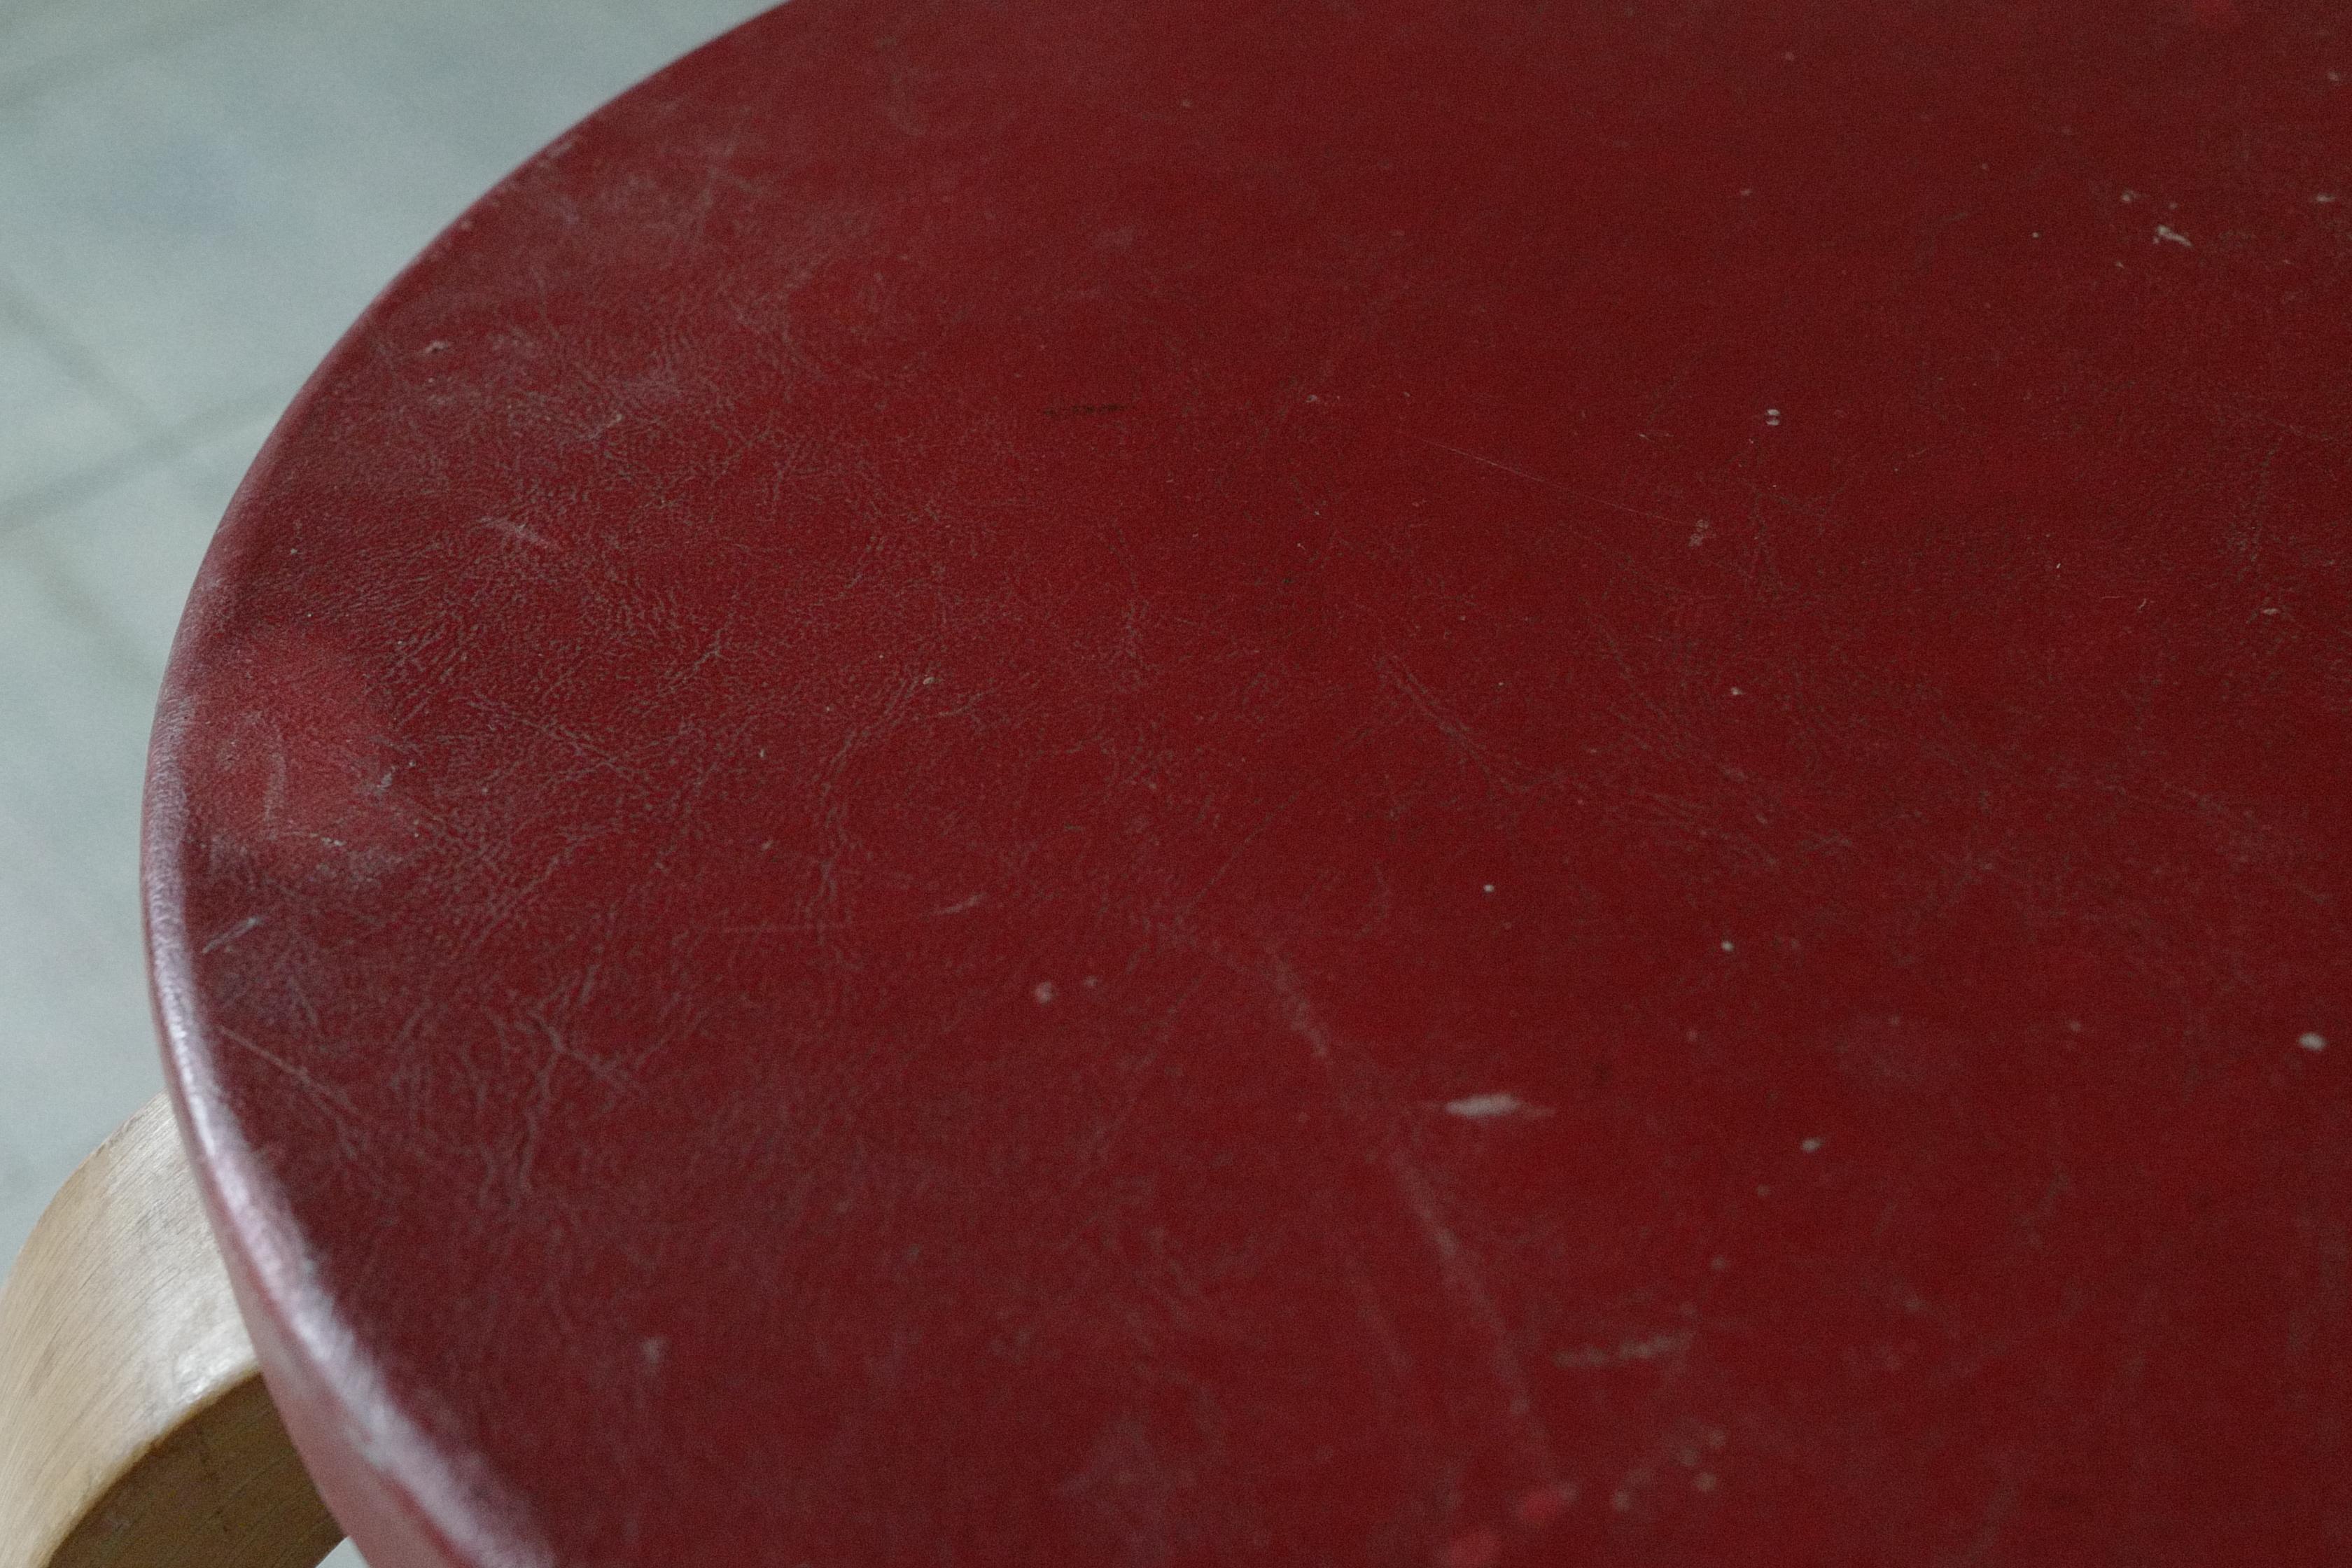 alvar aalto stool60 vinyl leather red 1950's For Sale 1